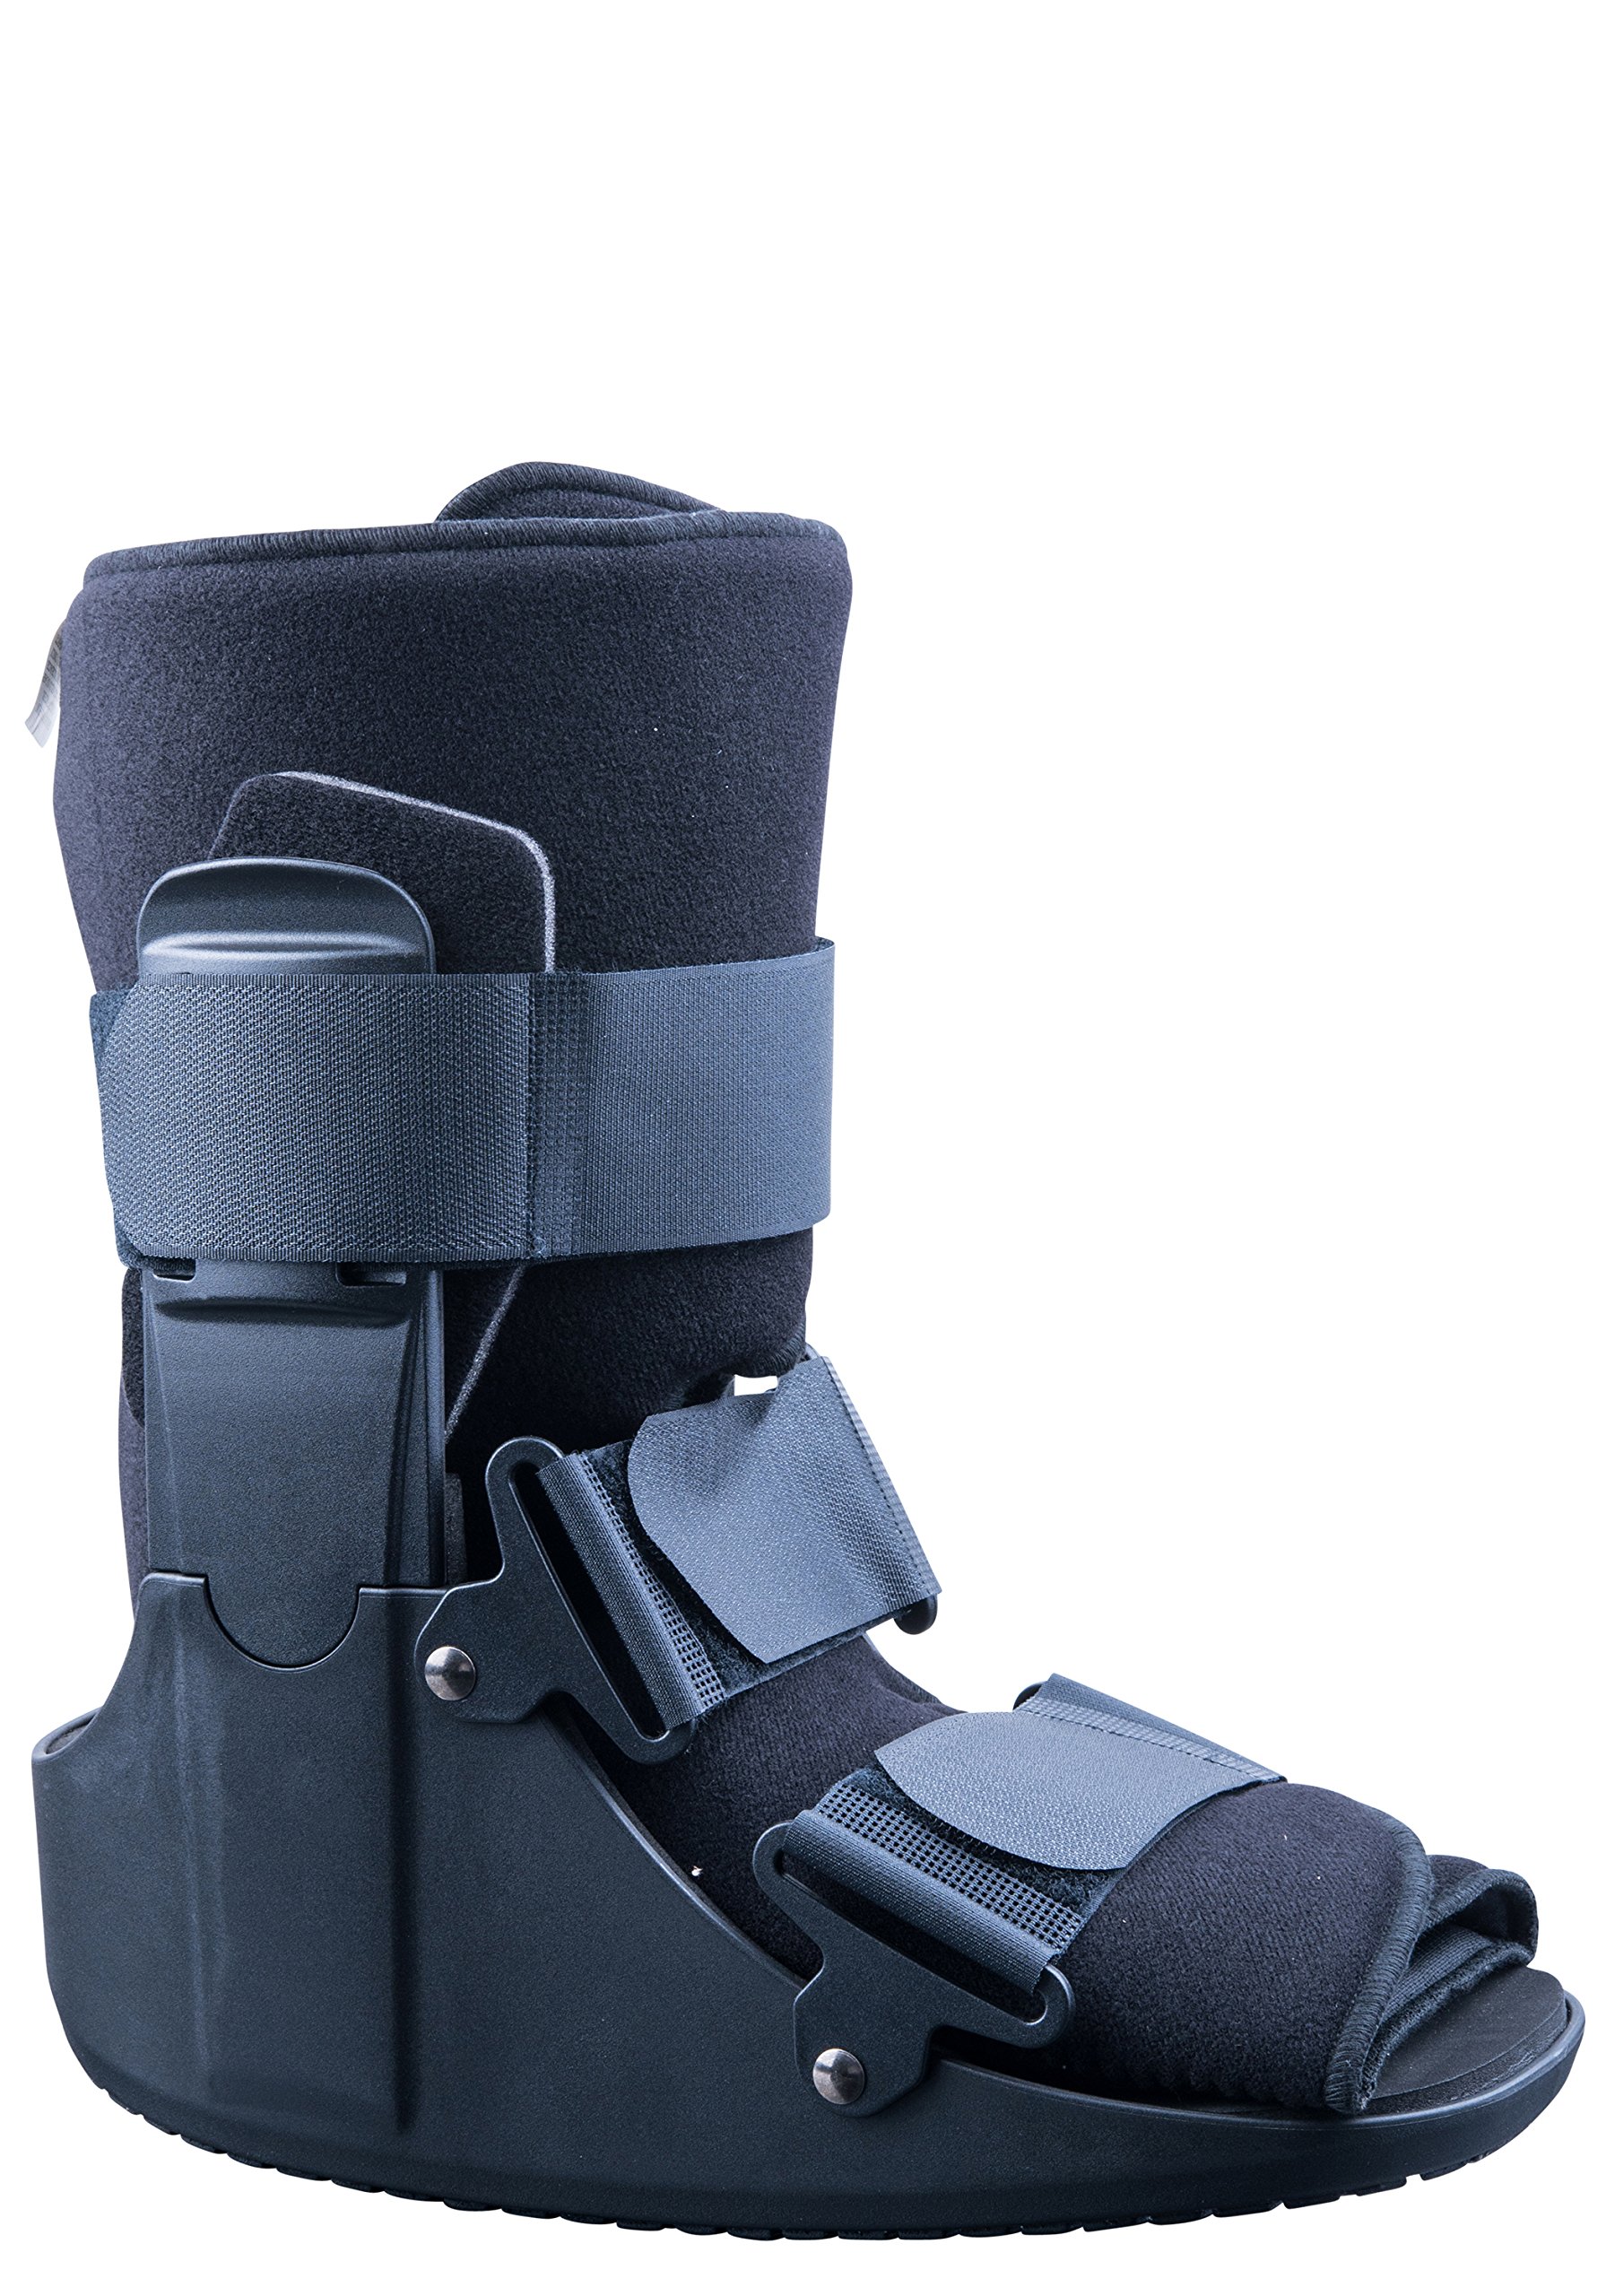 MARS Wellness Polymer Short Cam Walker Boot - Fracture, Sprained Ankle/Foot Stabilizer - Broken Toe Walking Ankle Boot for Men or Women - XS